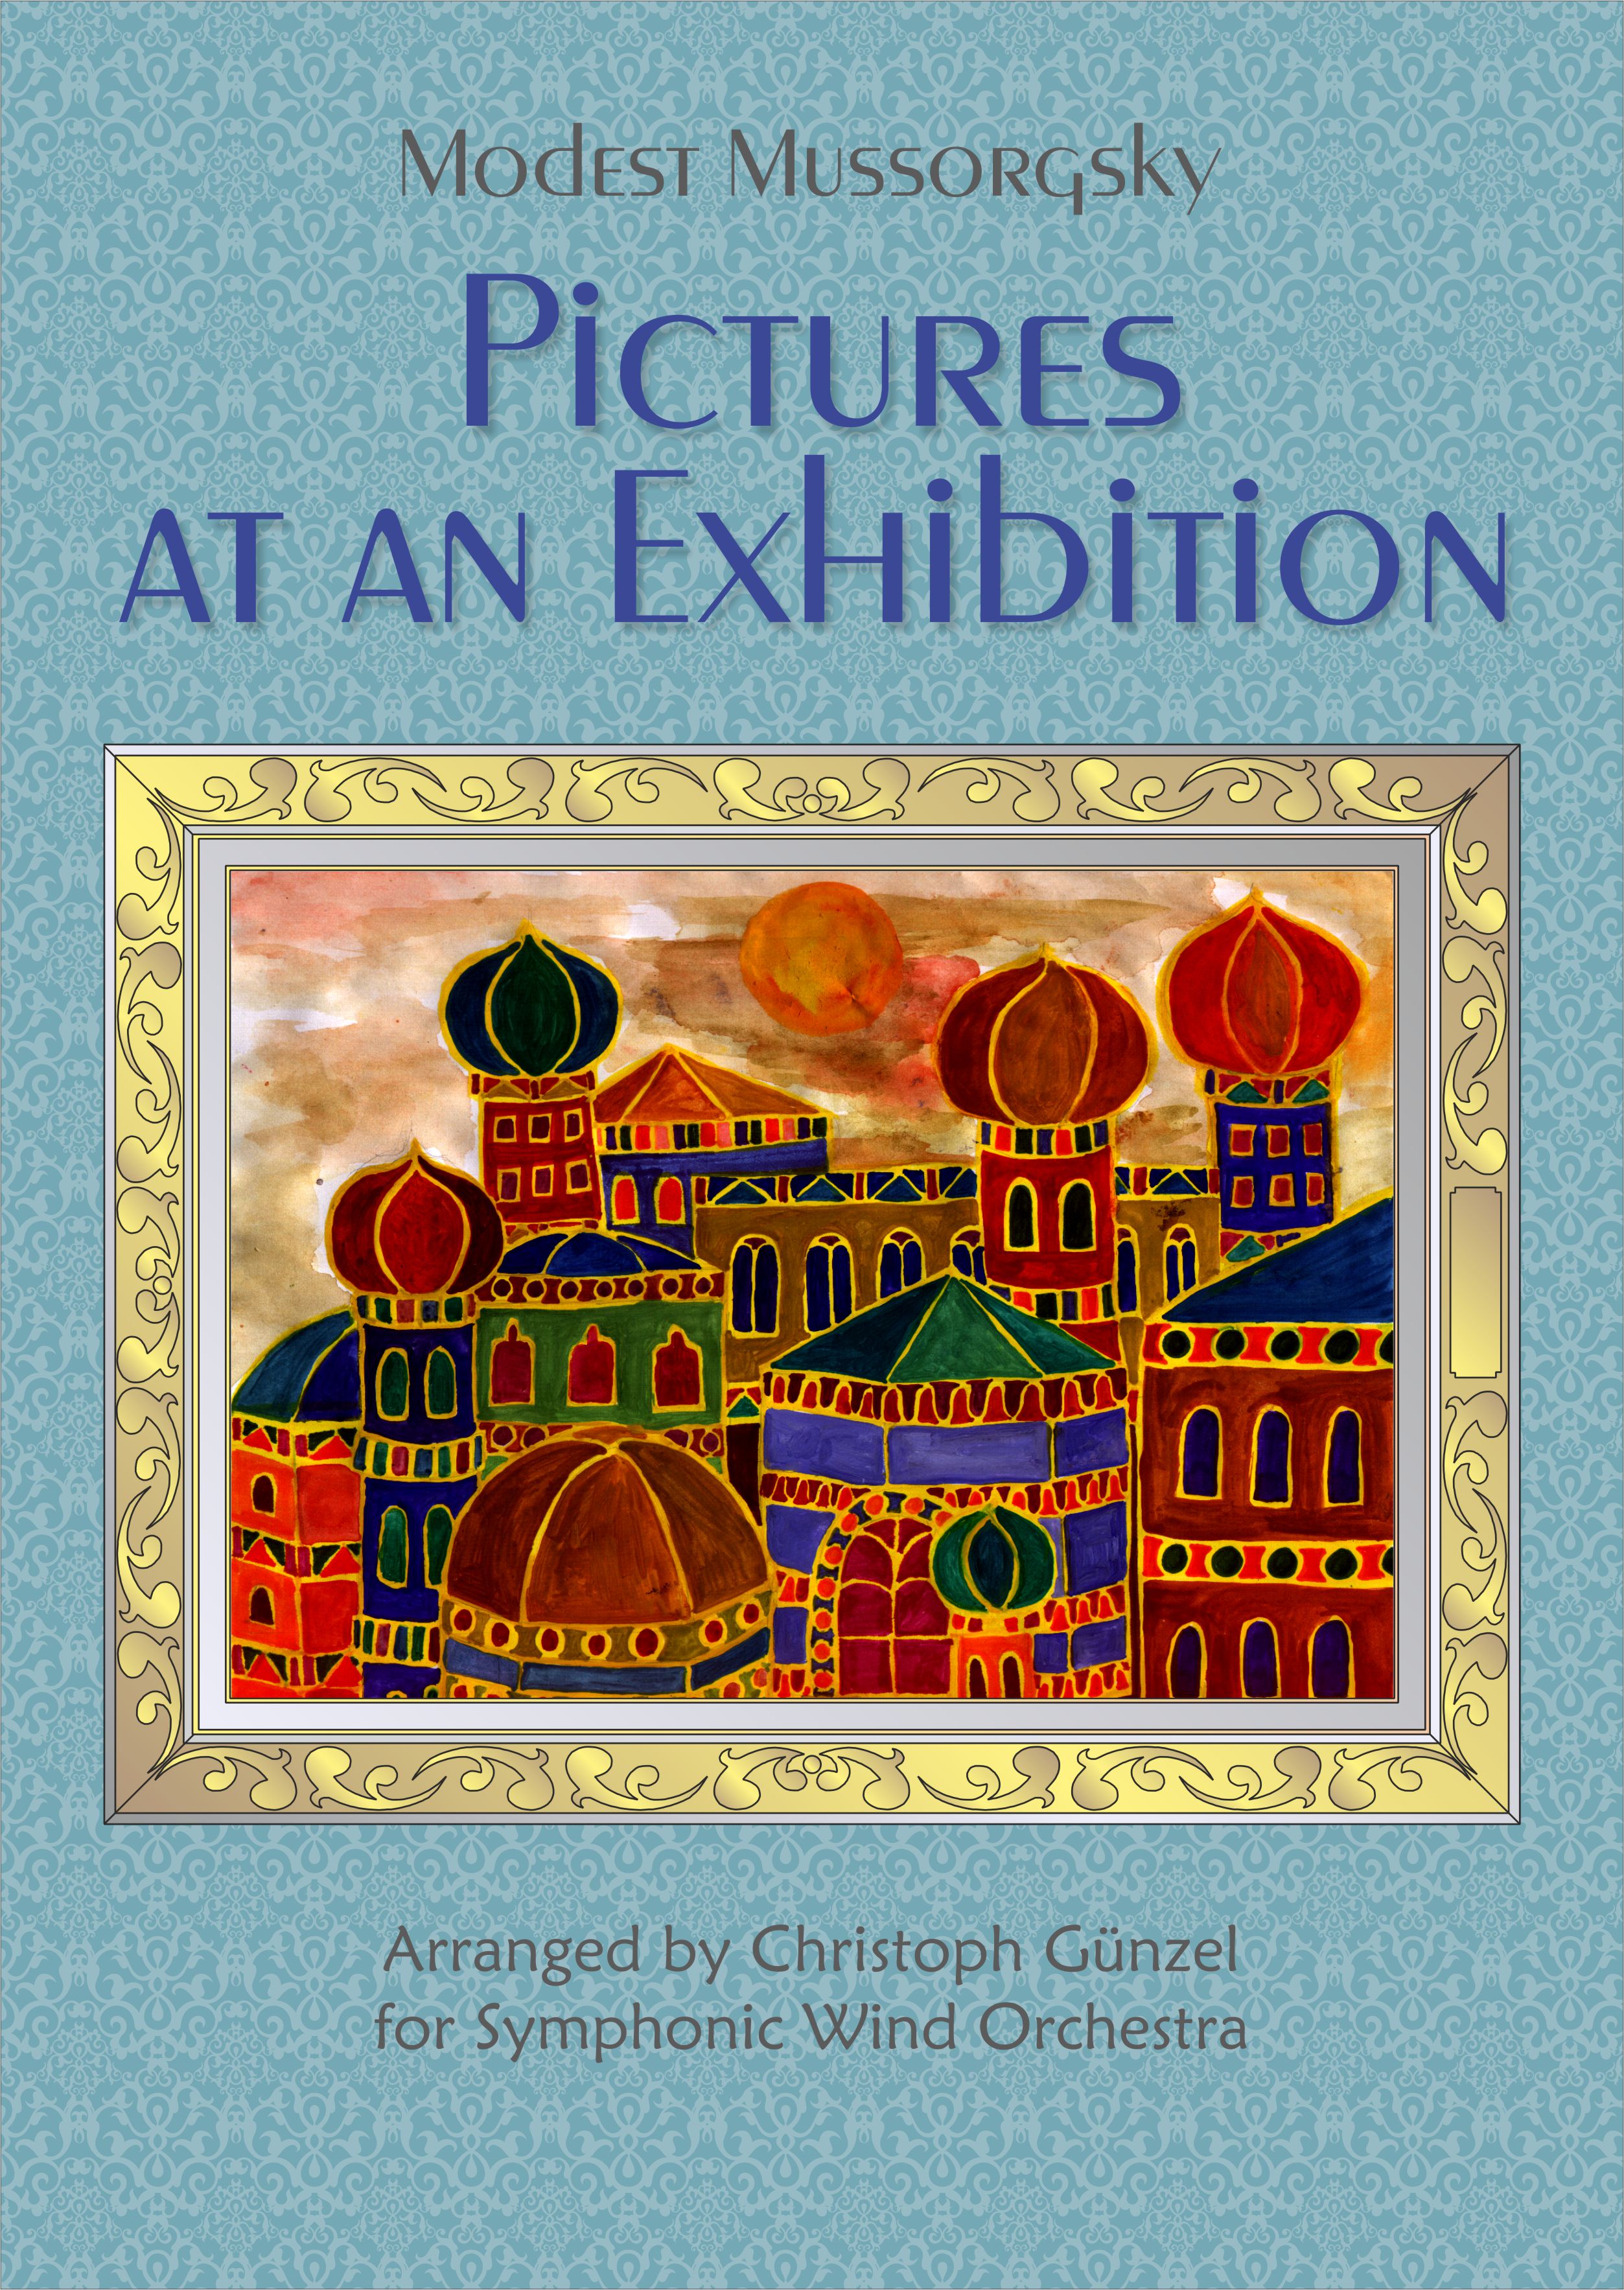 Pictures atan Exhibition